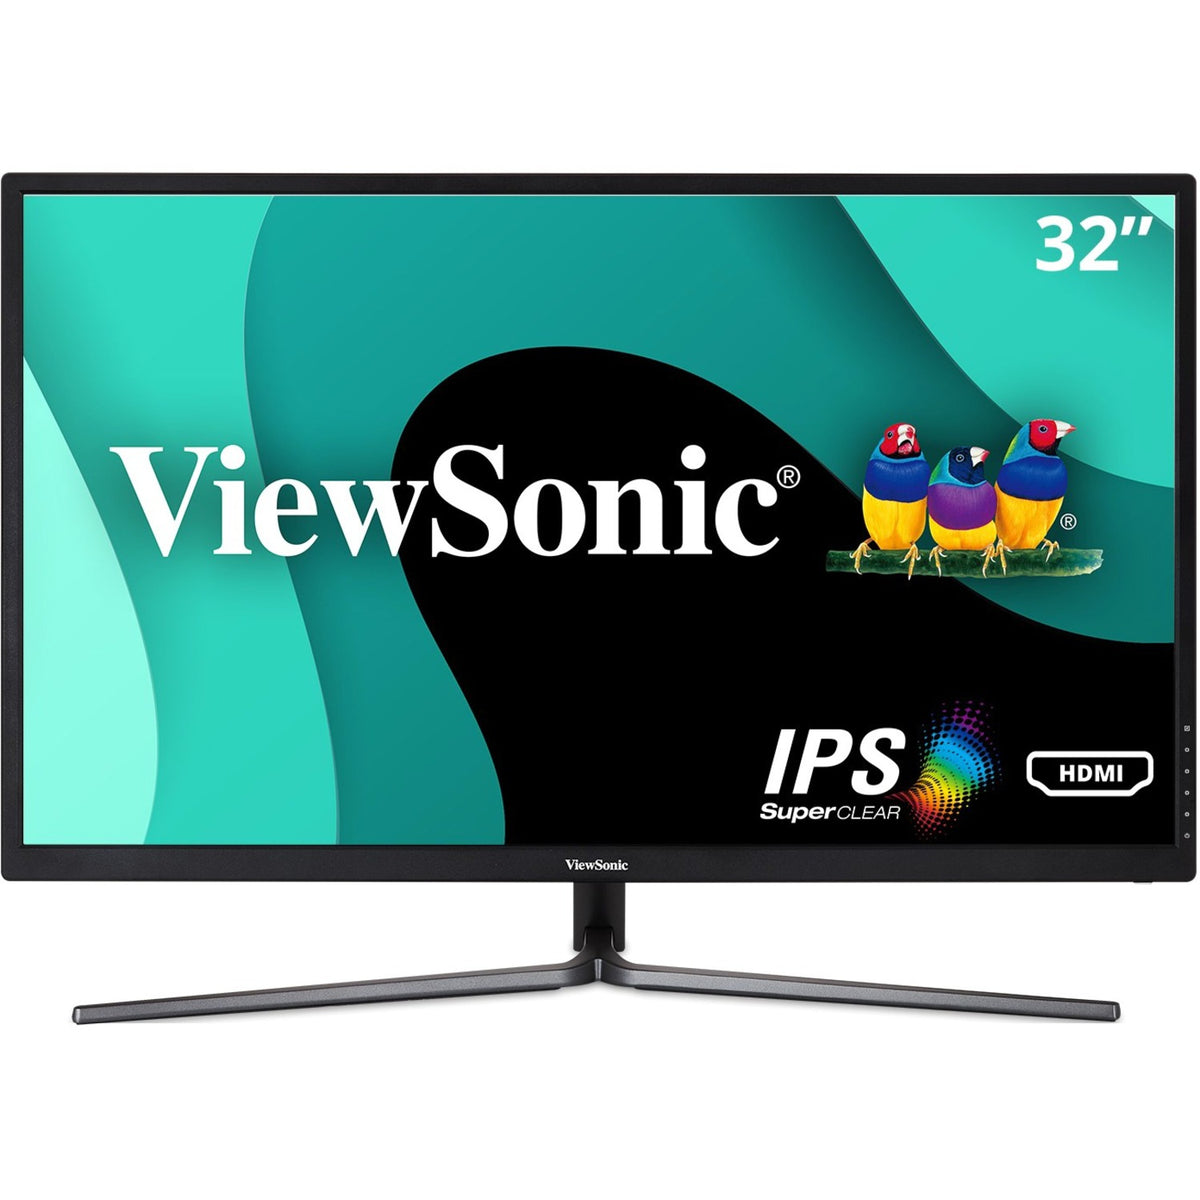 ViewSonic VX3211-2K-MHD 32 Inch IPS WQHD 1440p Monitor with 99% sRGB Color Coverage HDMI VGA and DisplayPort - VX3211-2K-MHD